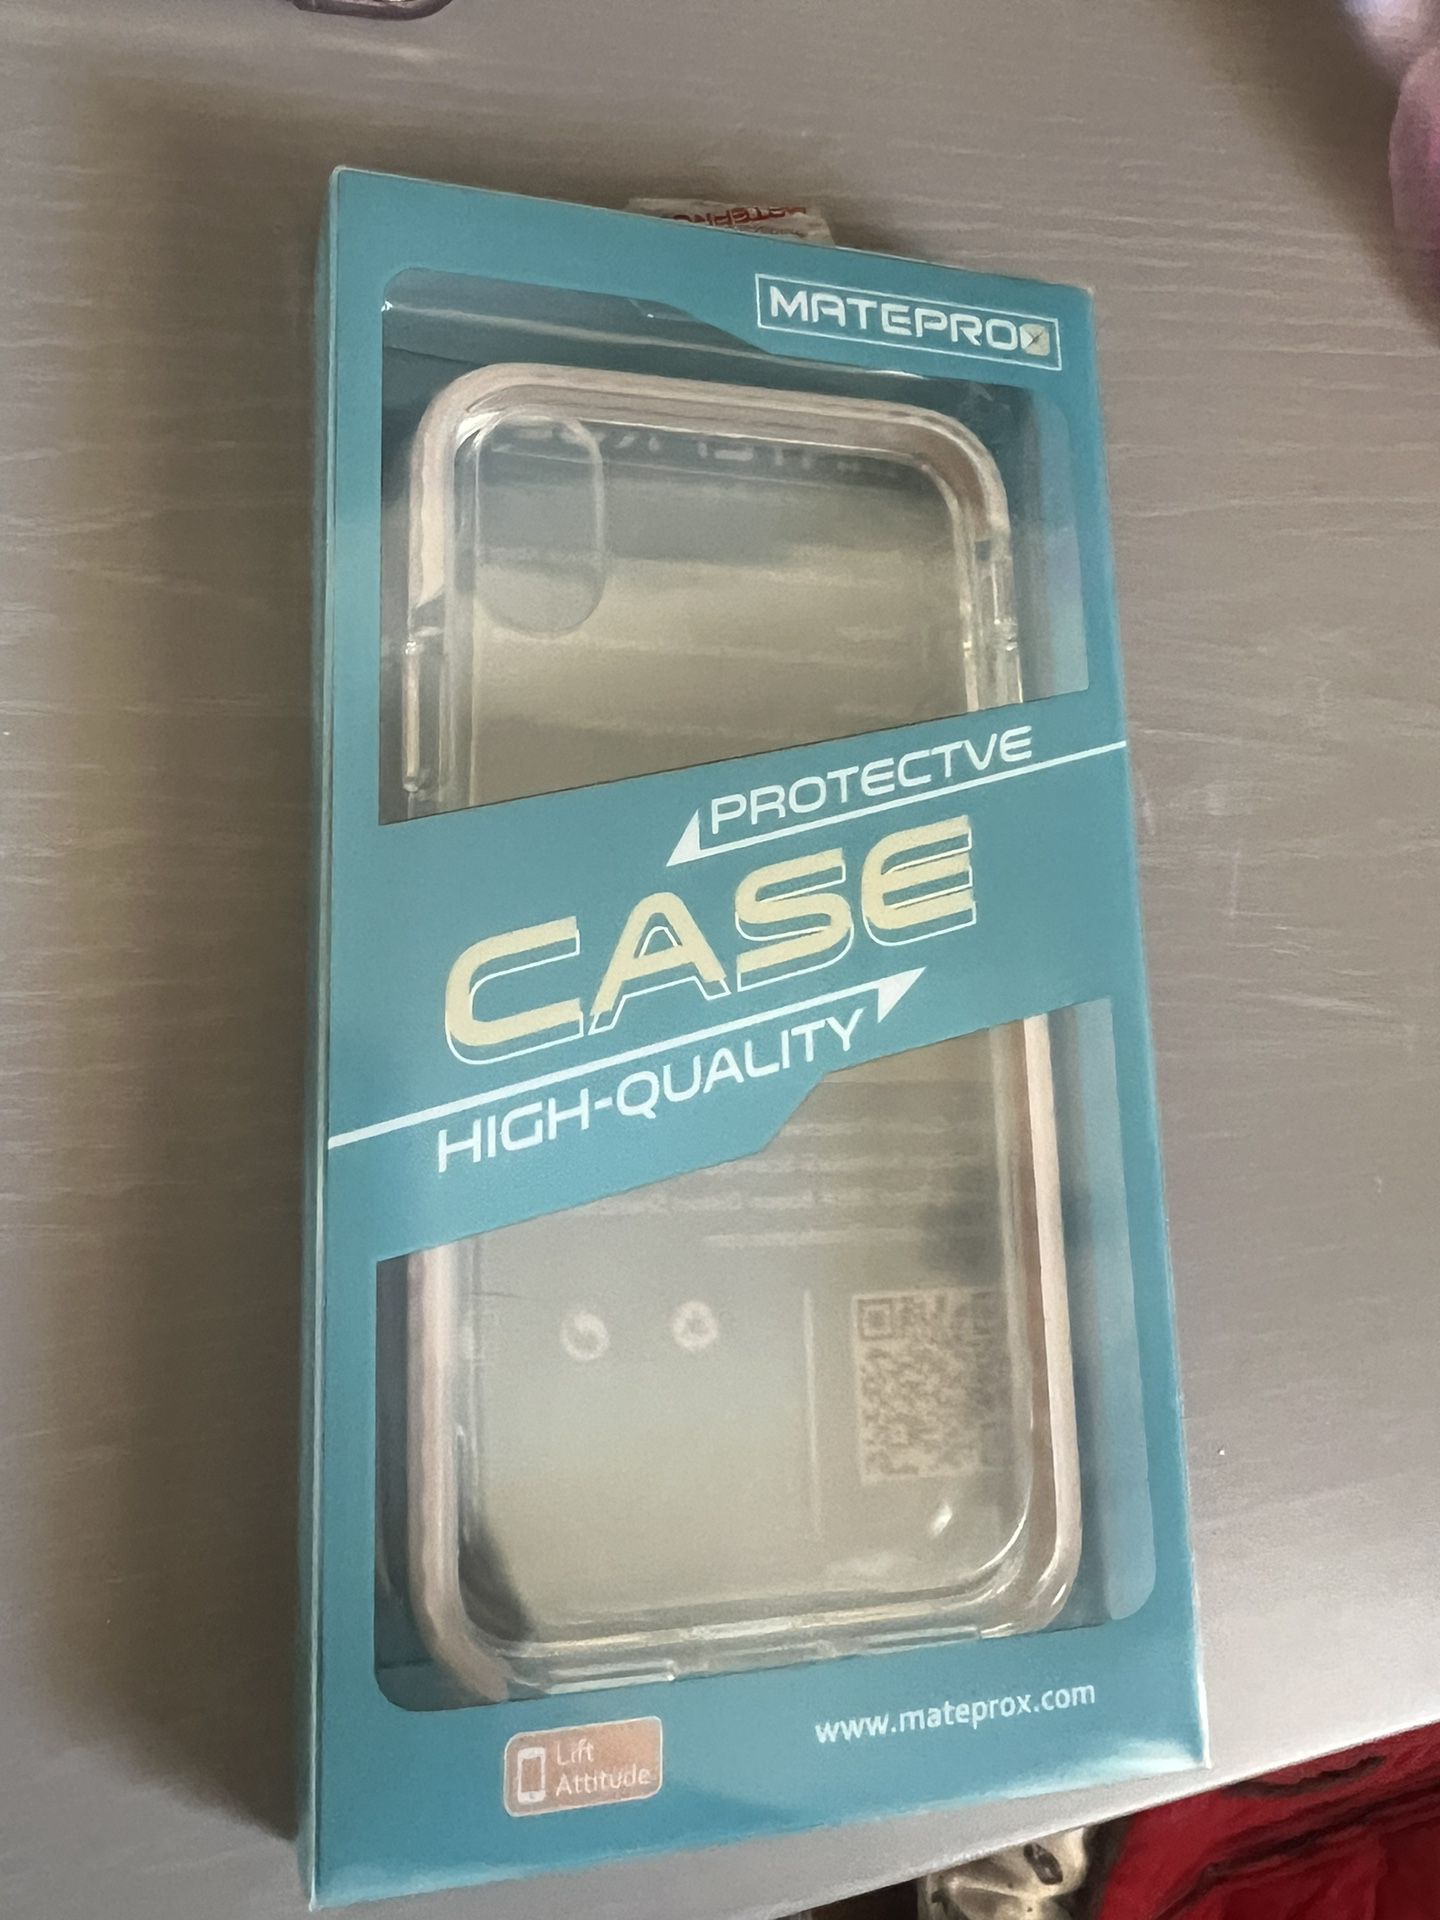 iPhone X Case 